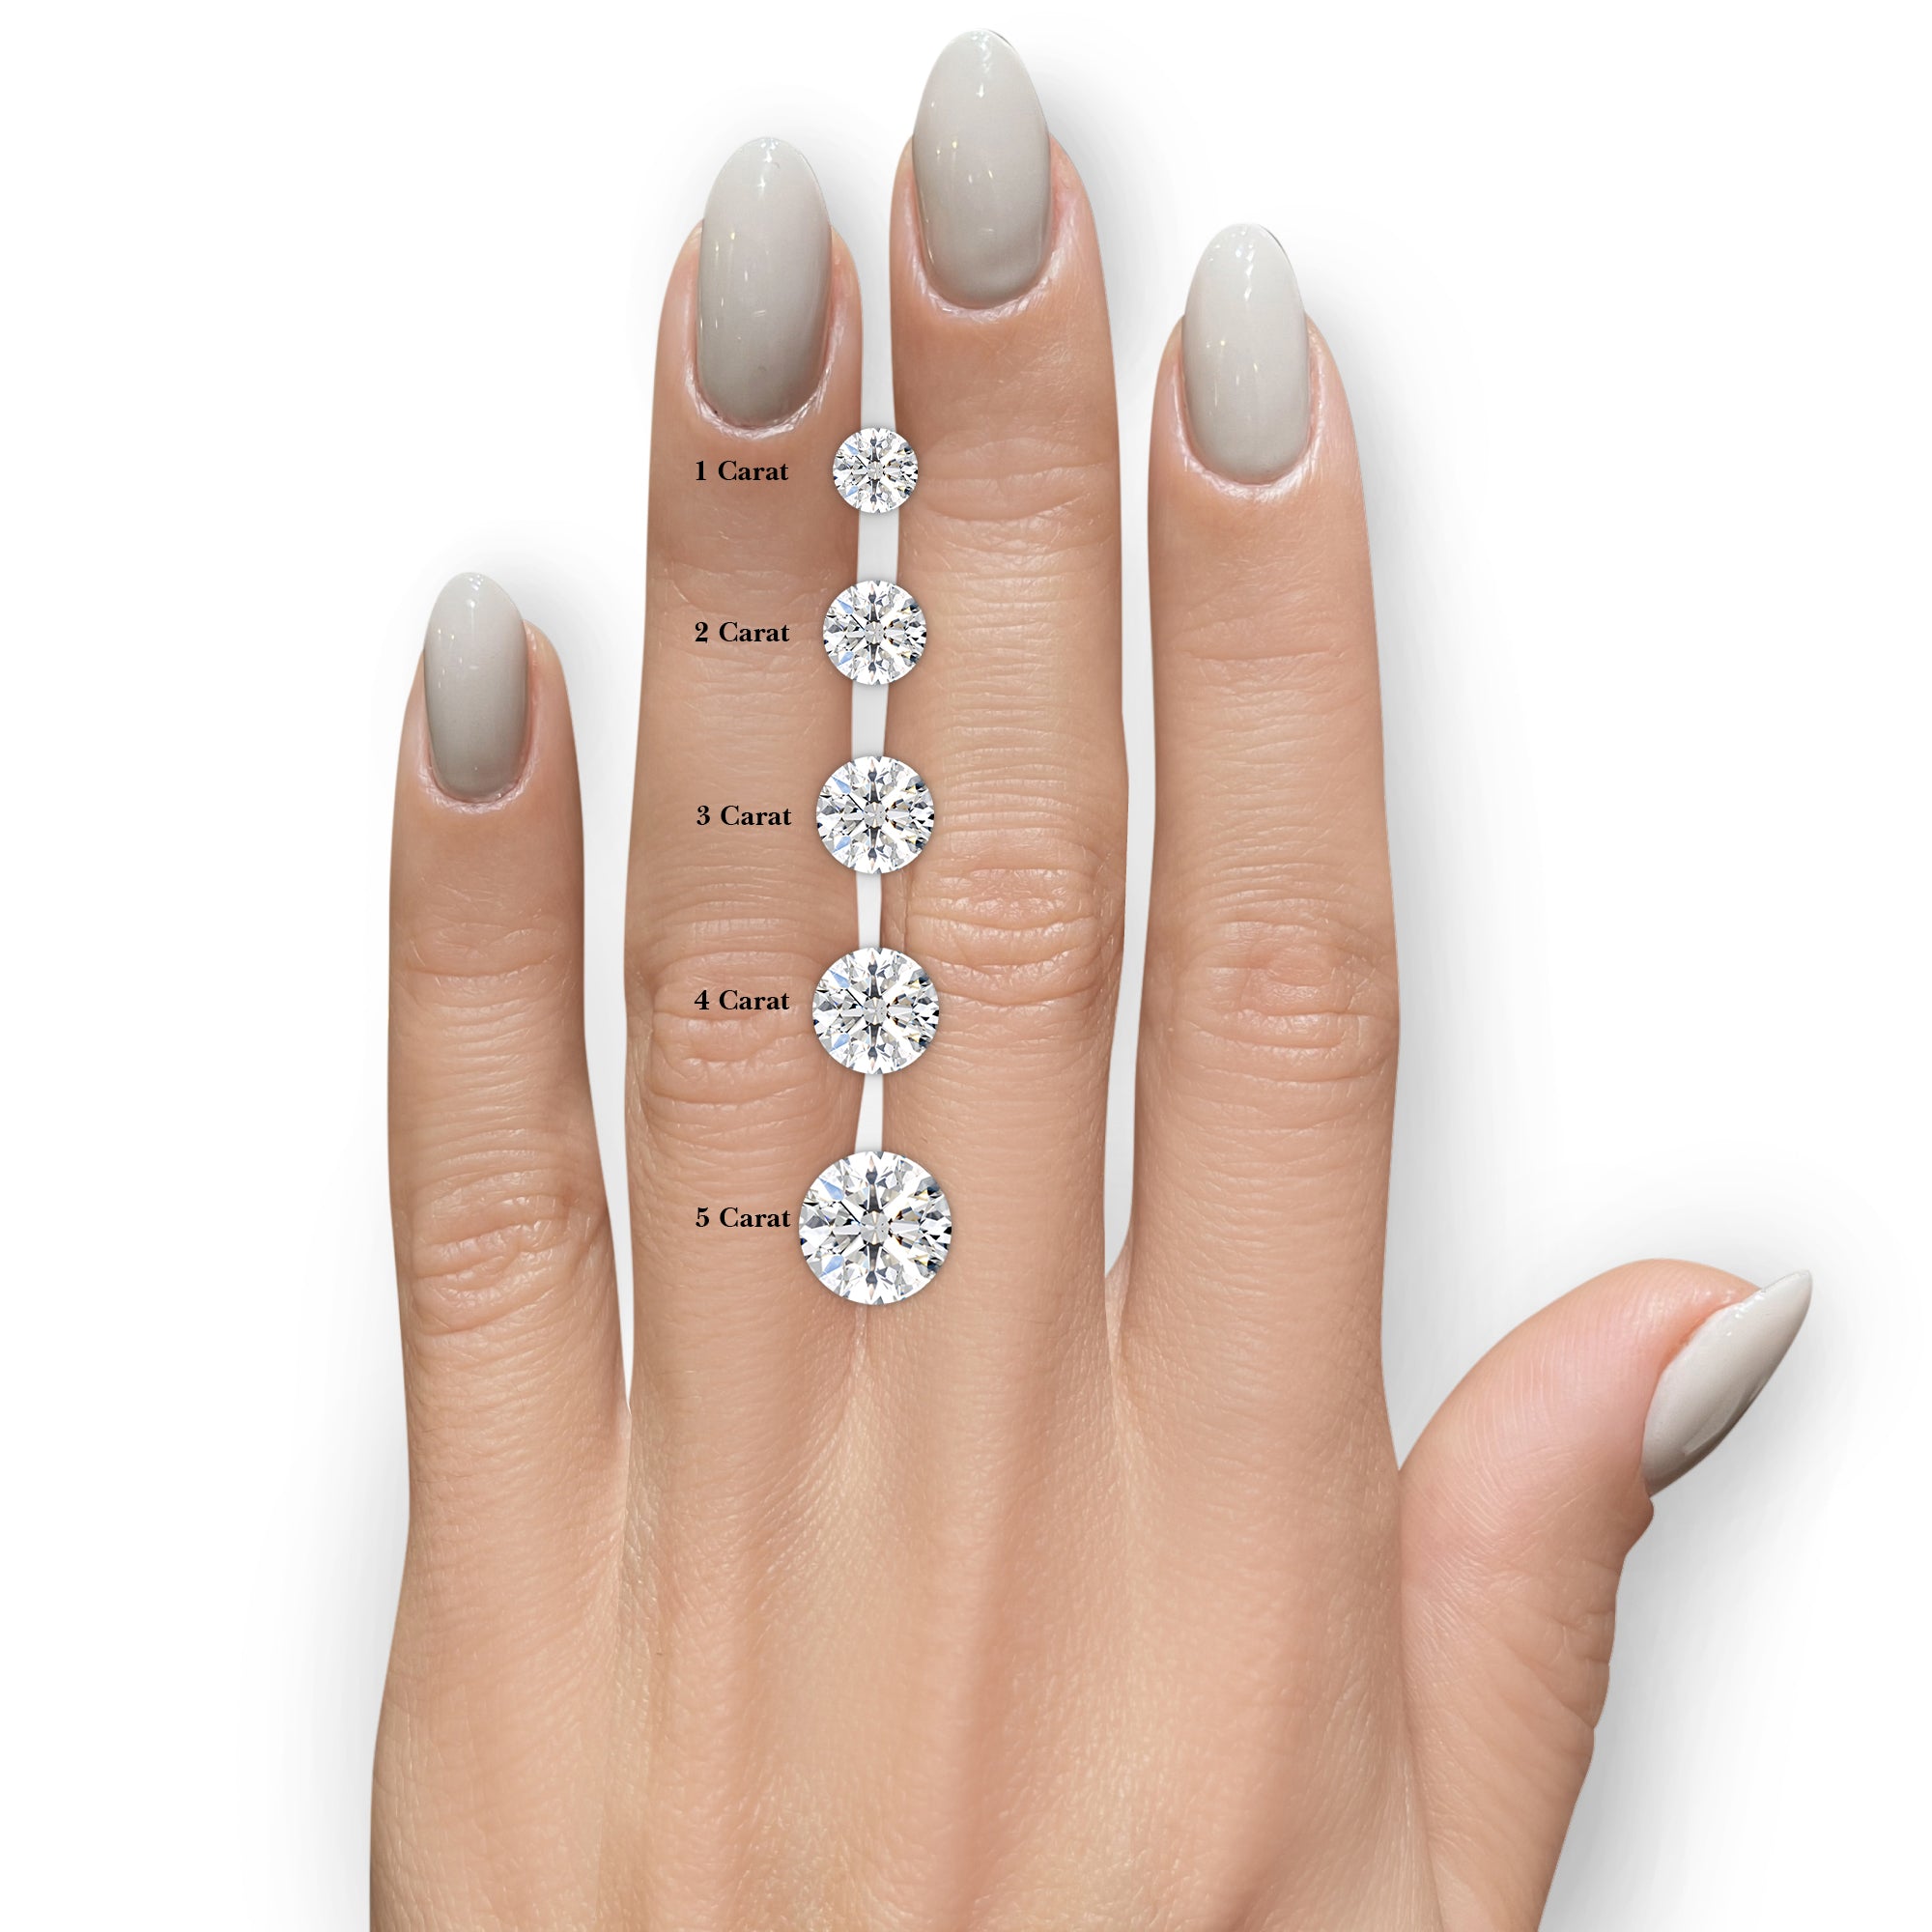 Catalina Moissanite & Diamonds Ring -14K White Gold